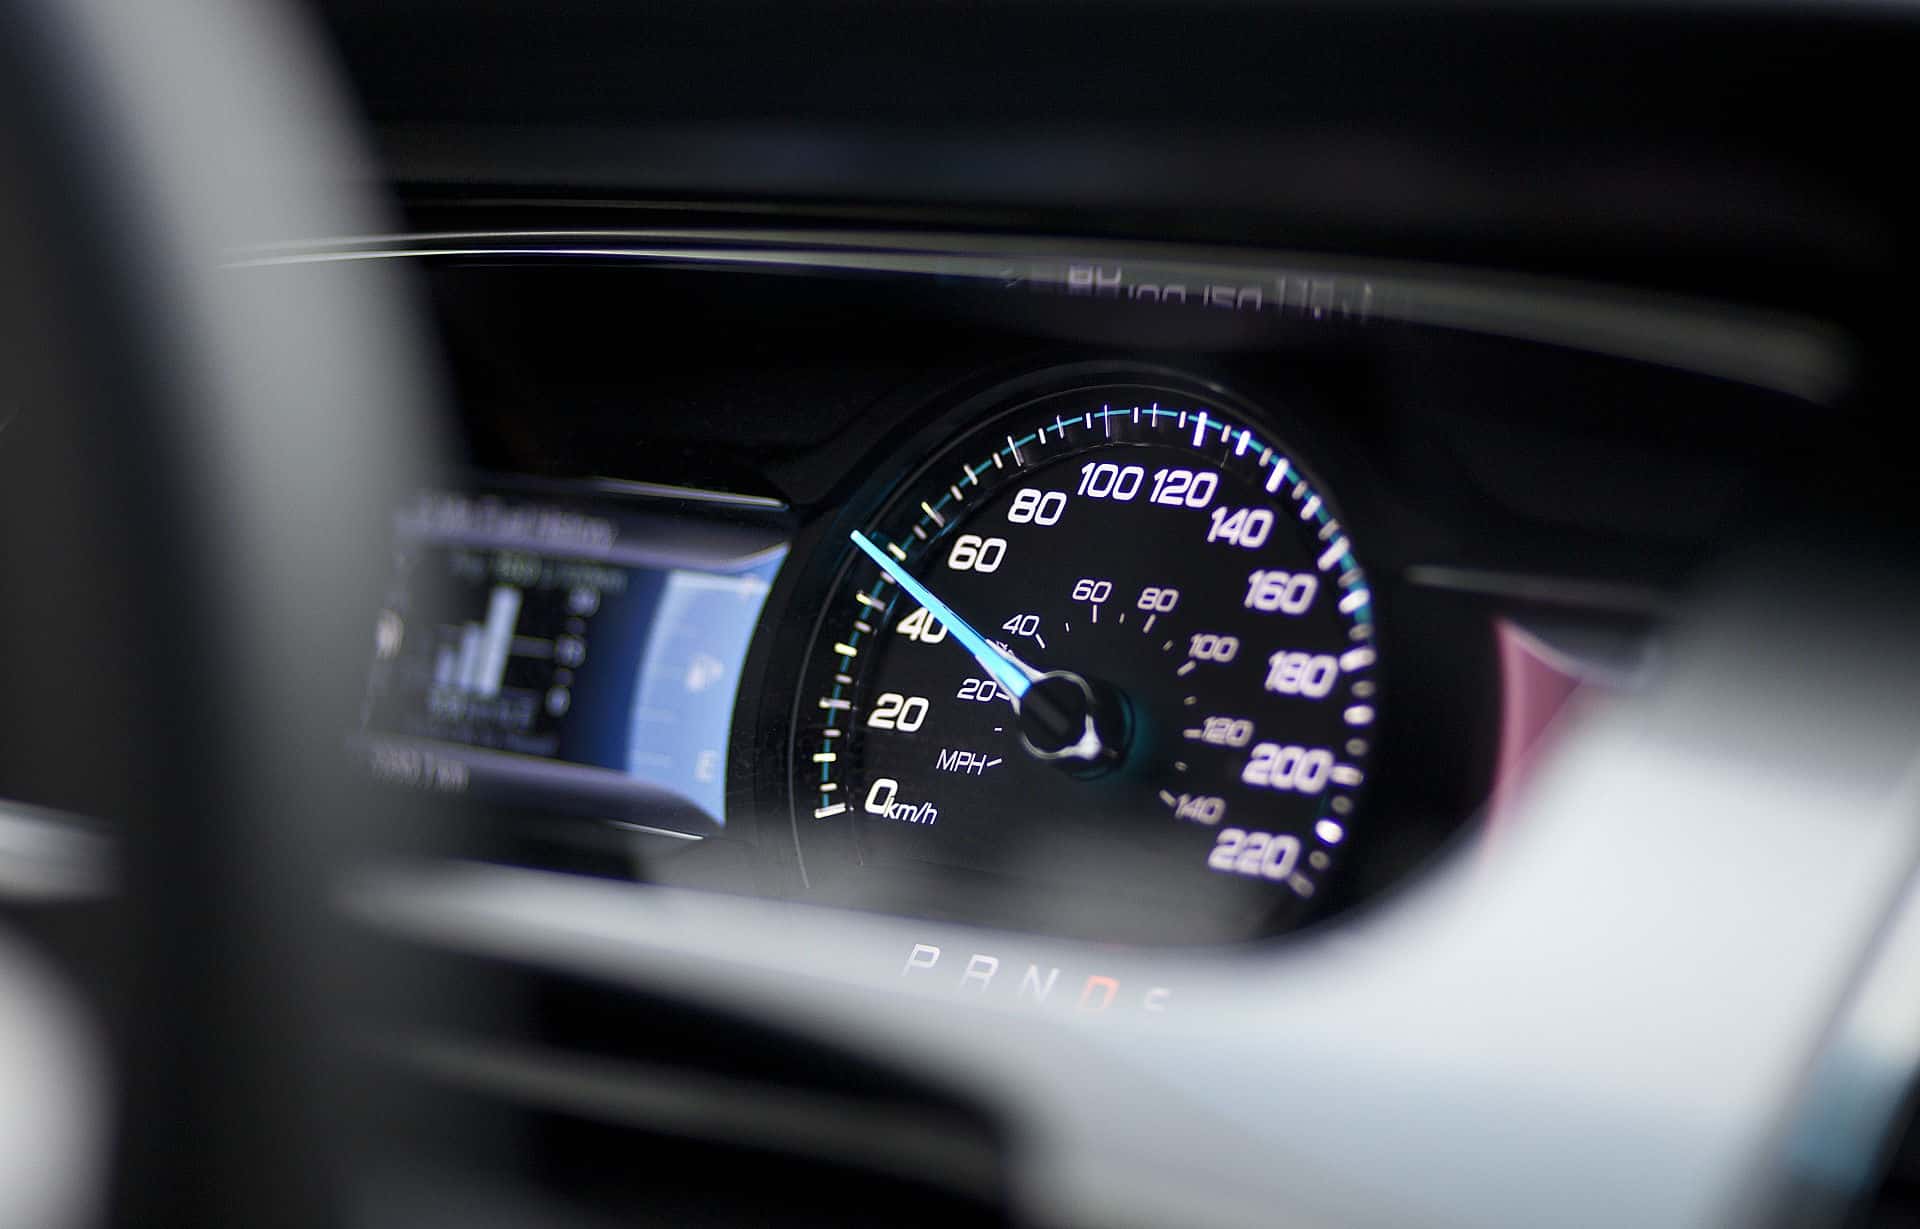 2013 Ford Taurus speedometer picture